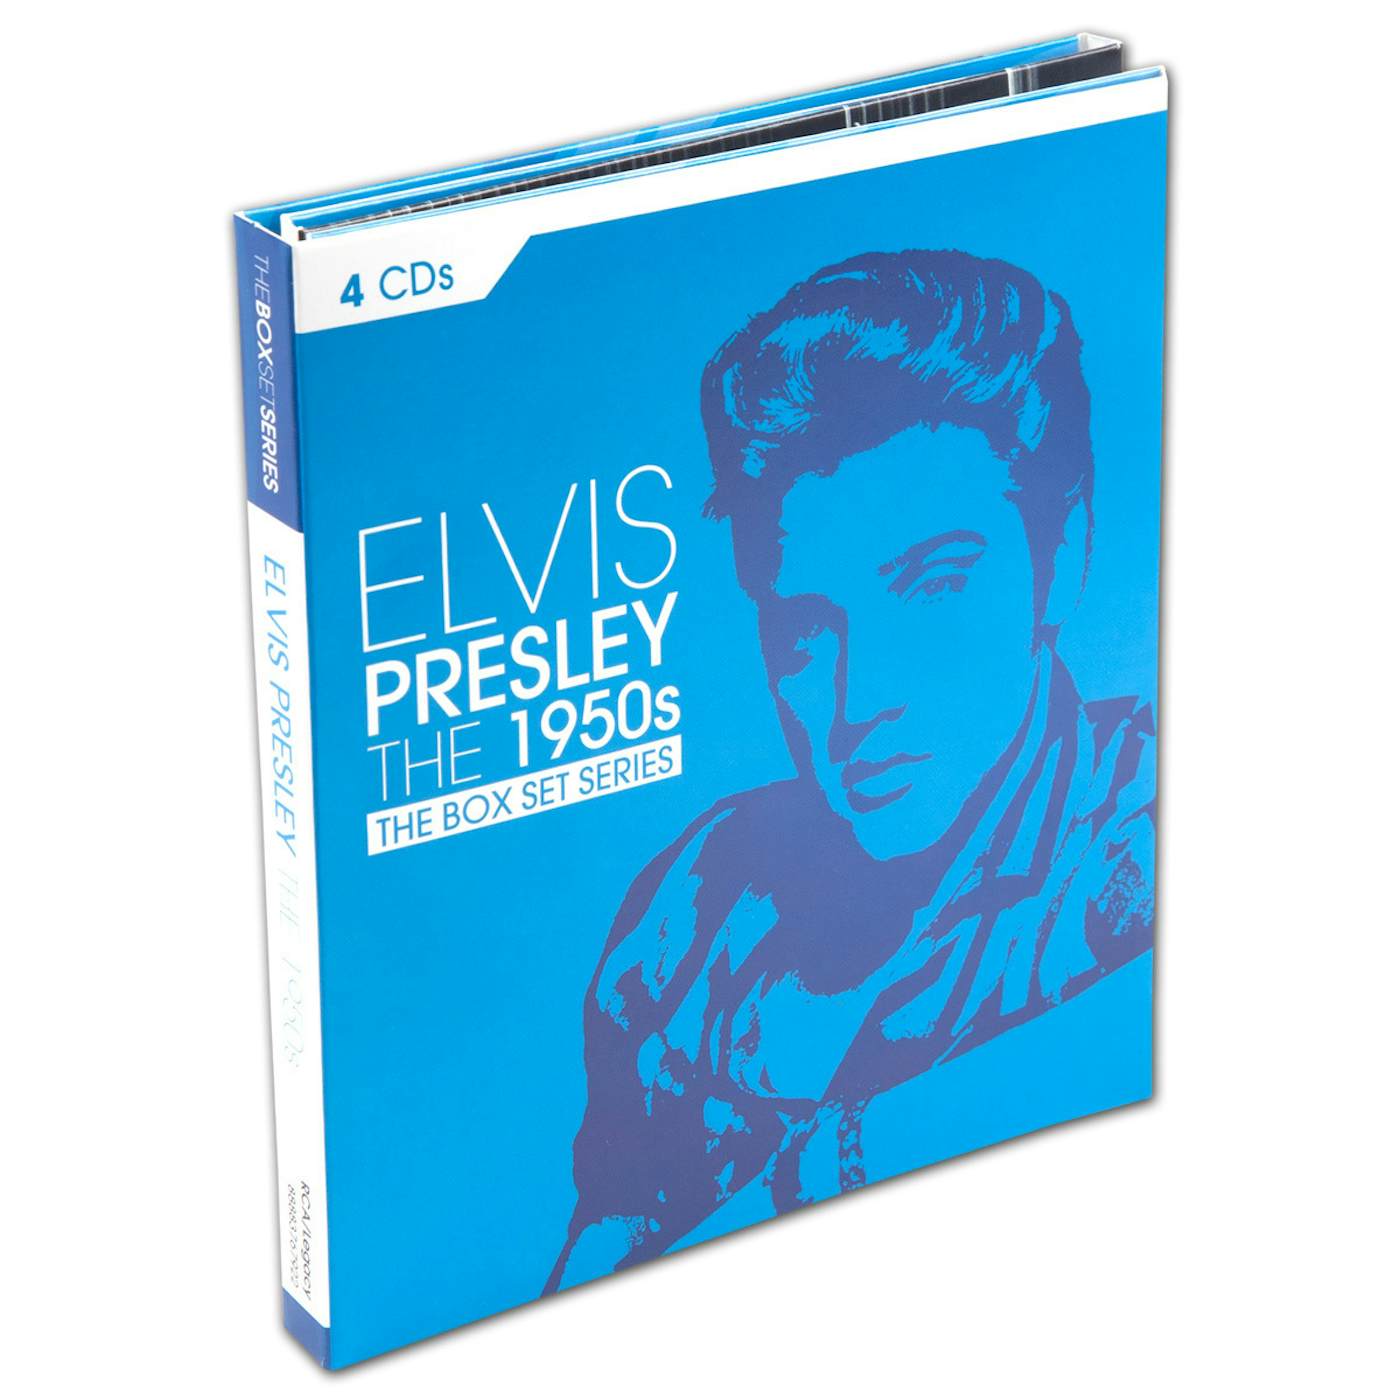 Elvis Presley - The 1950s: The Box Set Series